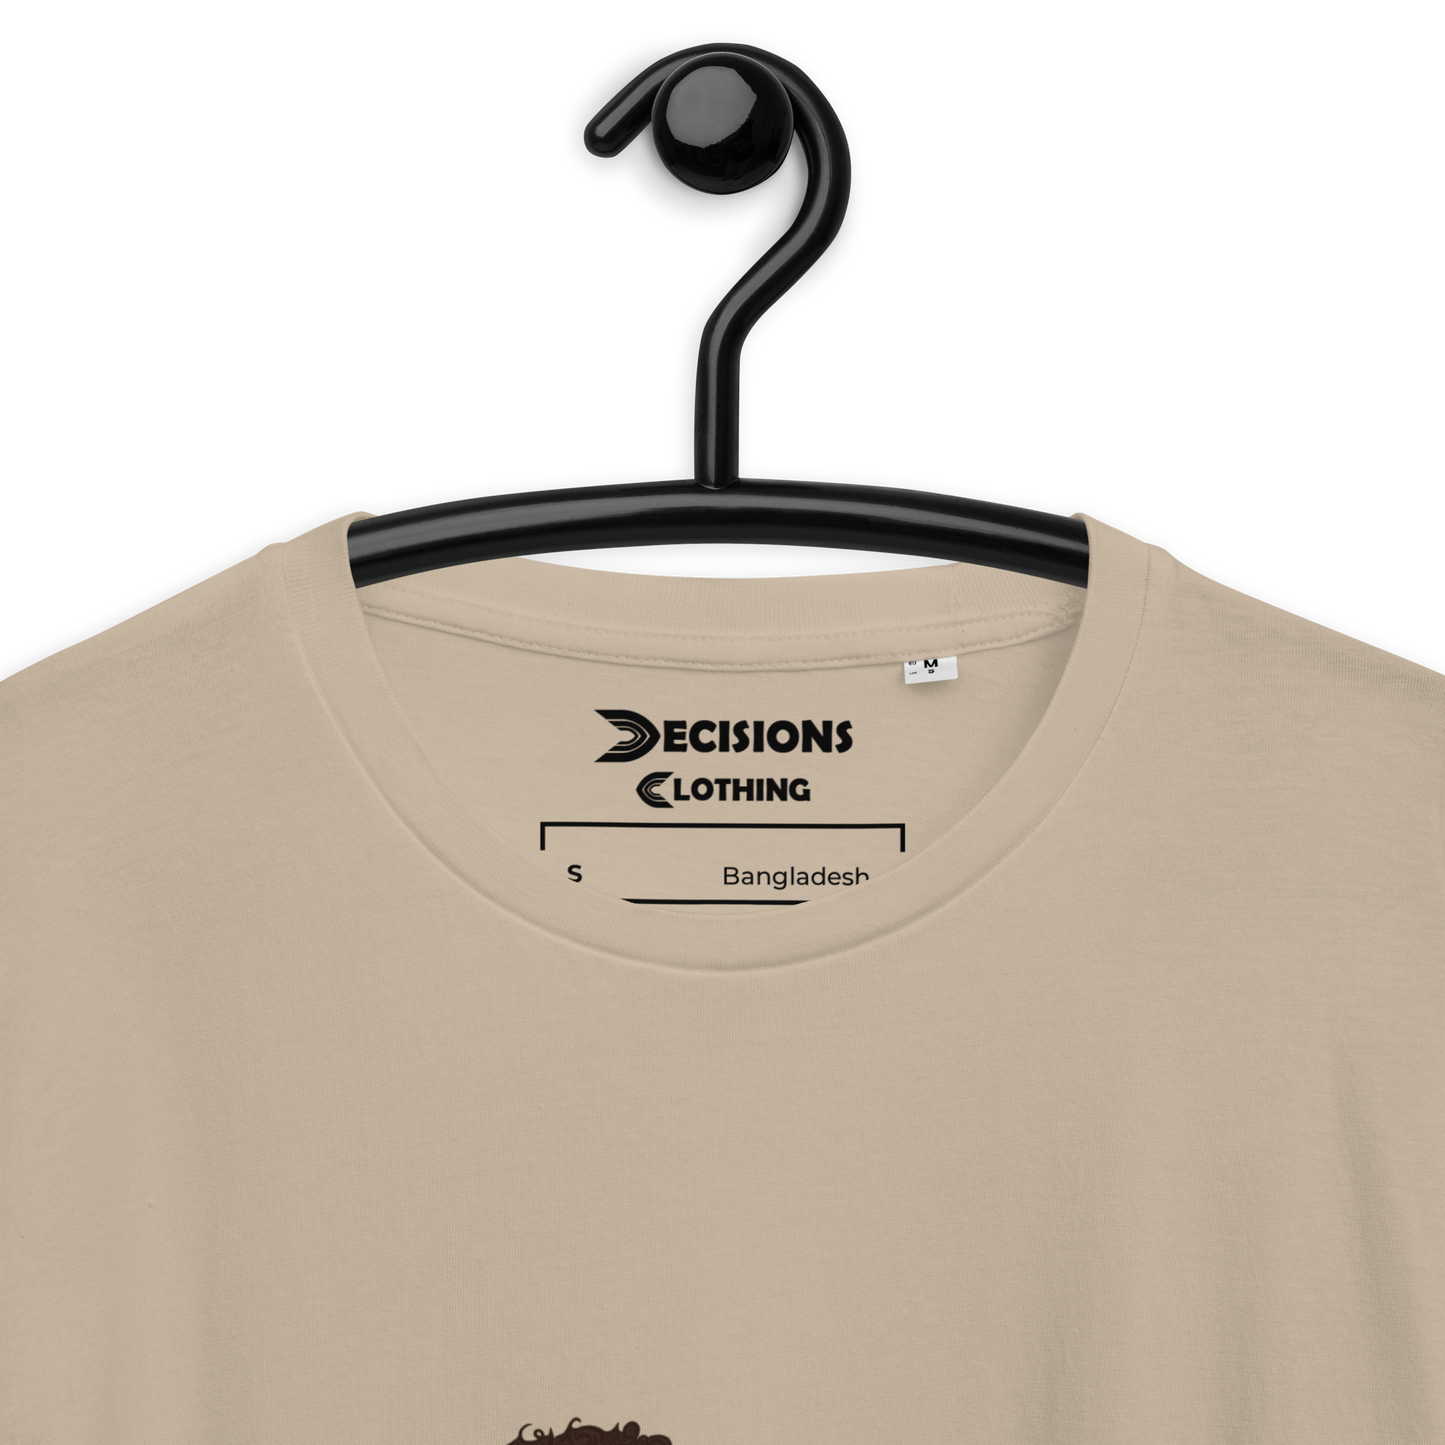 Bangalore Nessie T-Shirt (Apex Legends)